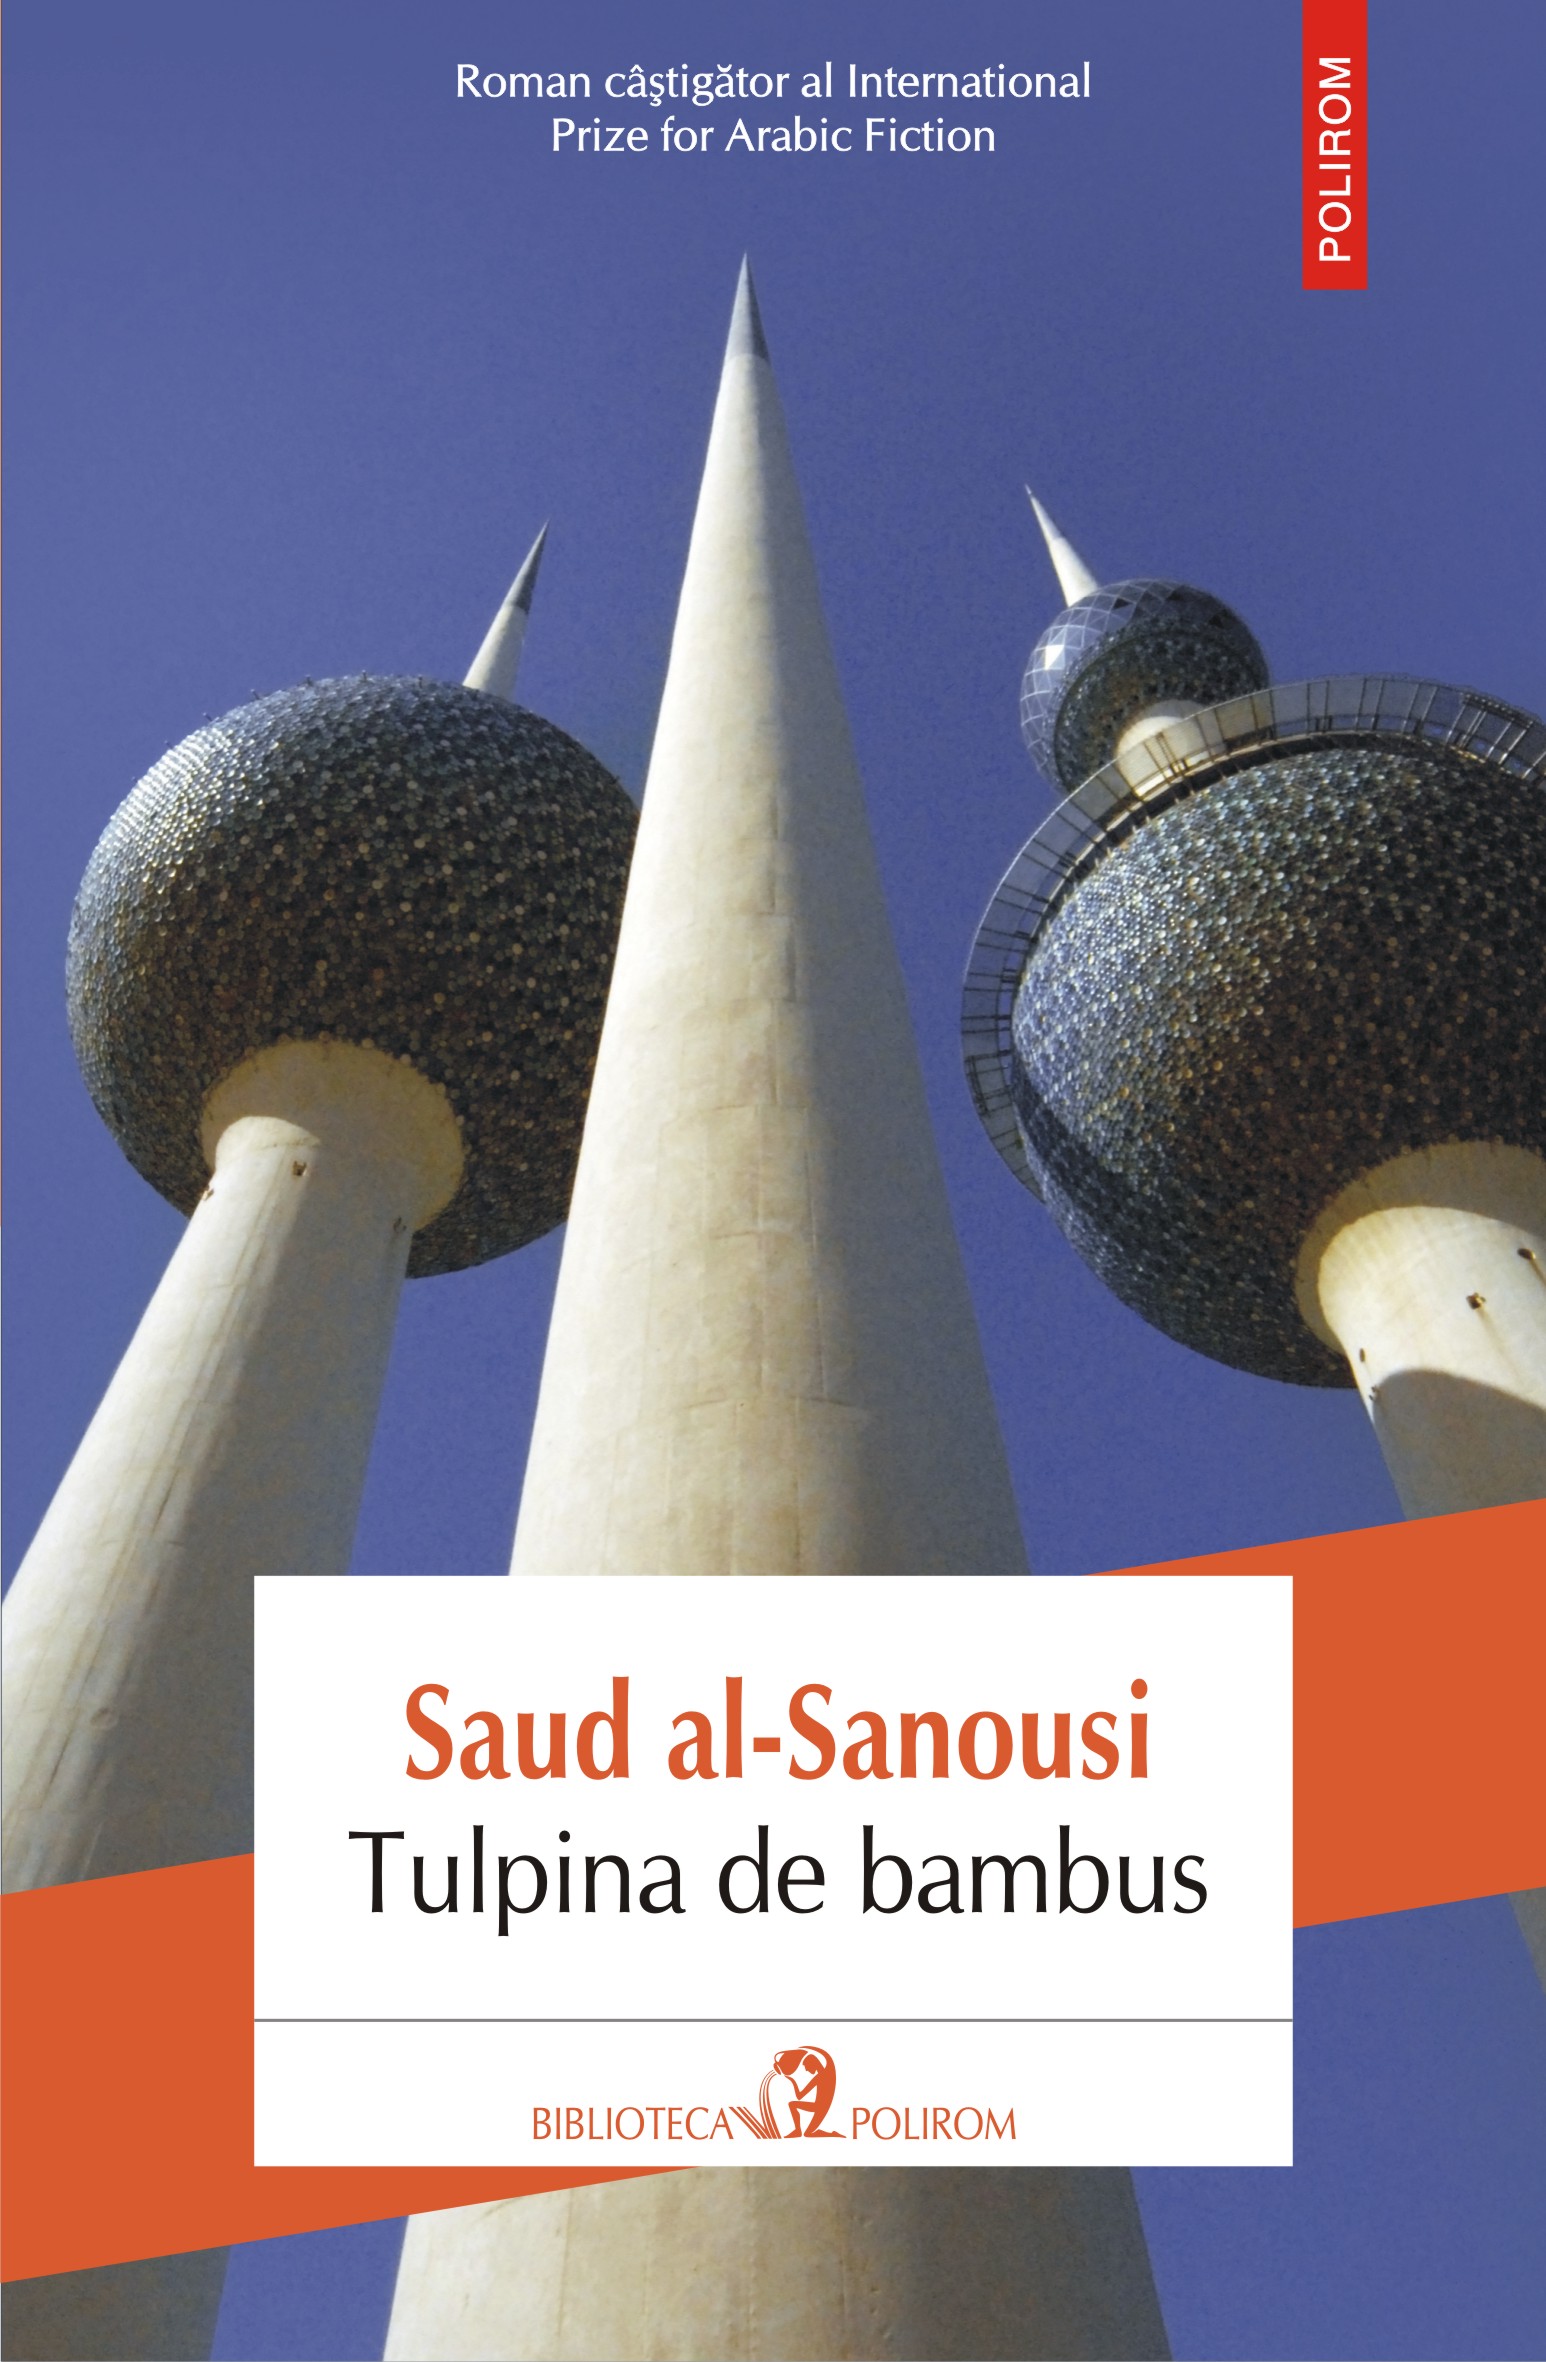 eBook Tulpina de bambus - Saud al-Sanousi